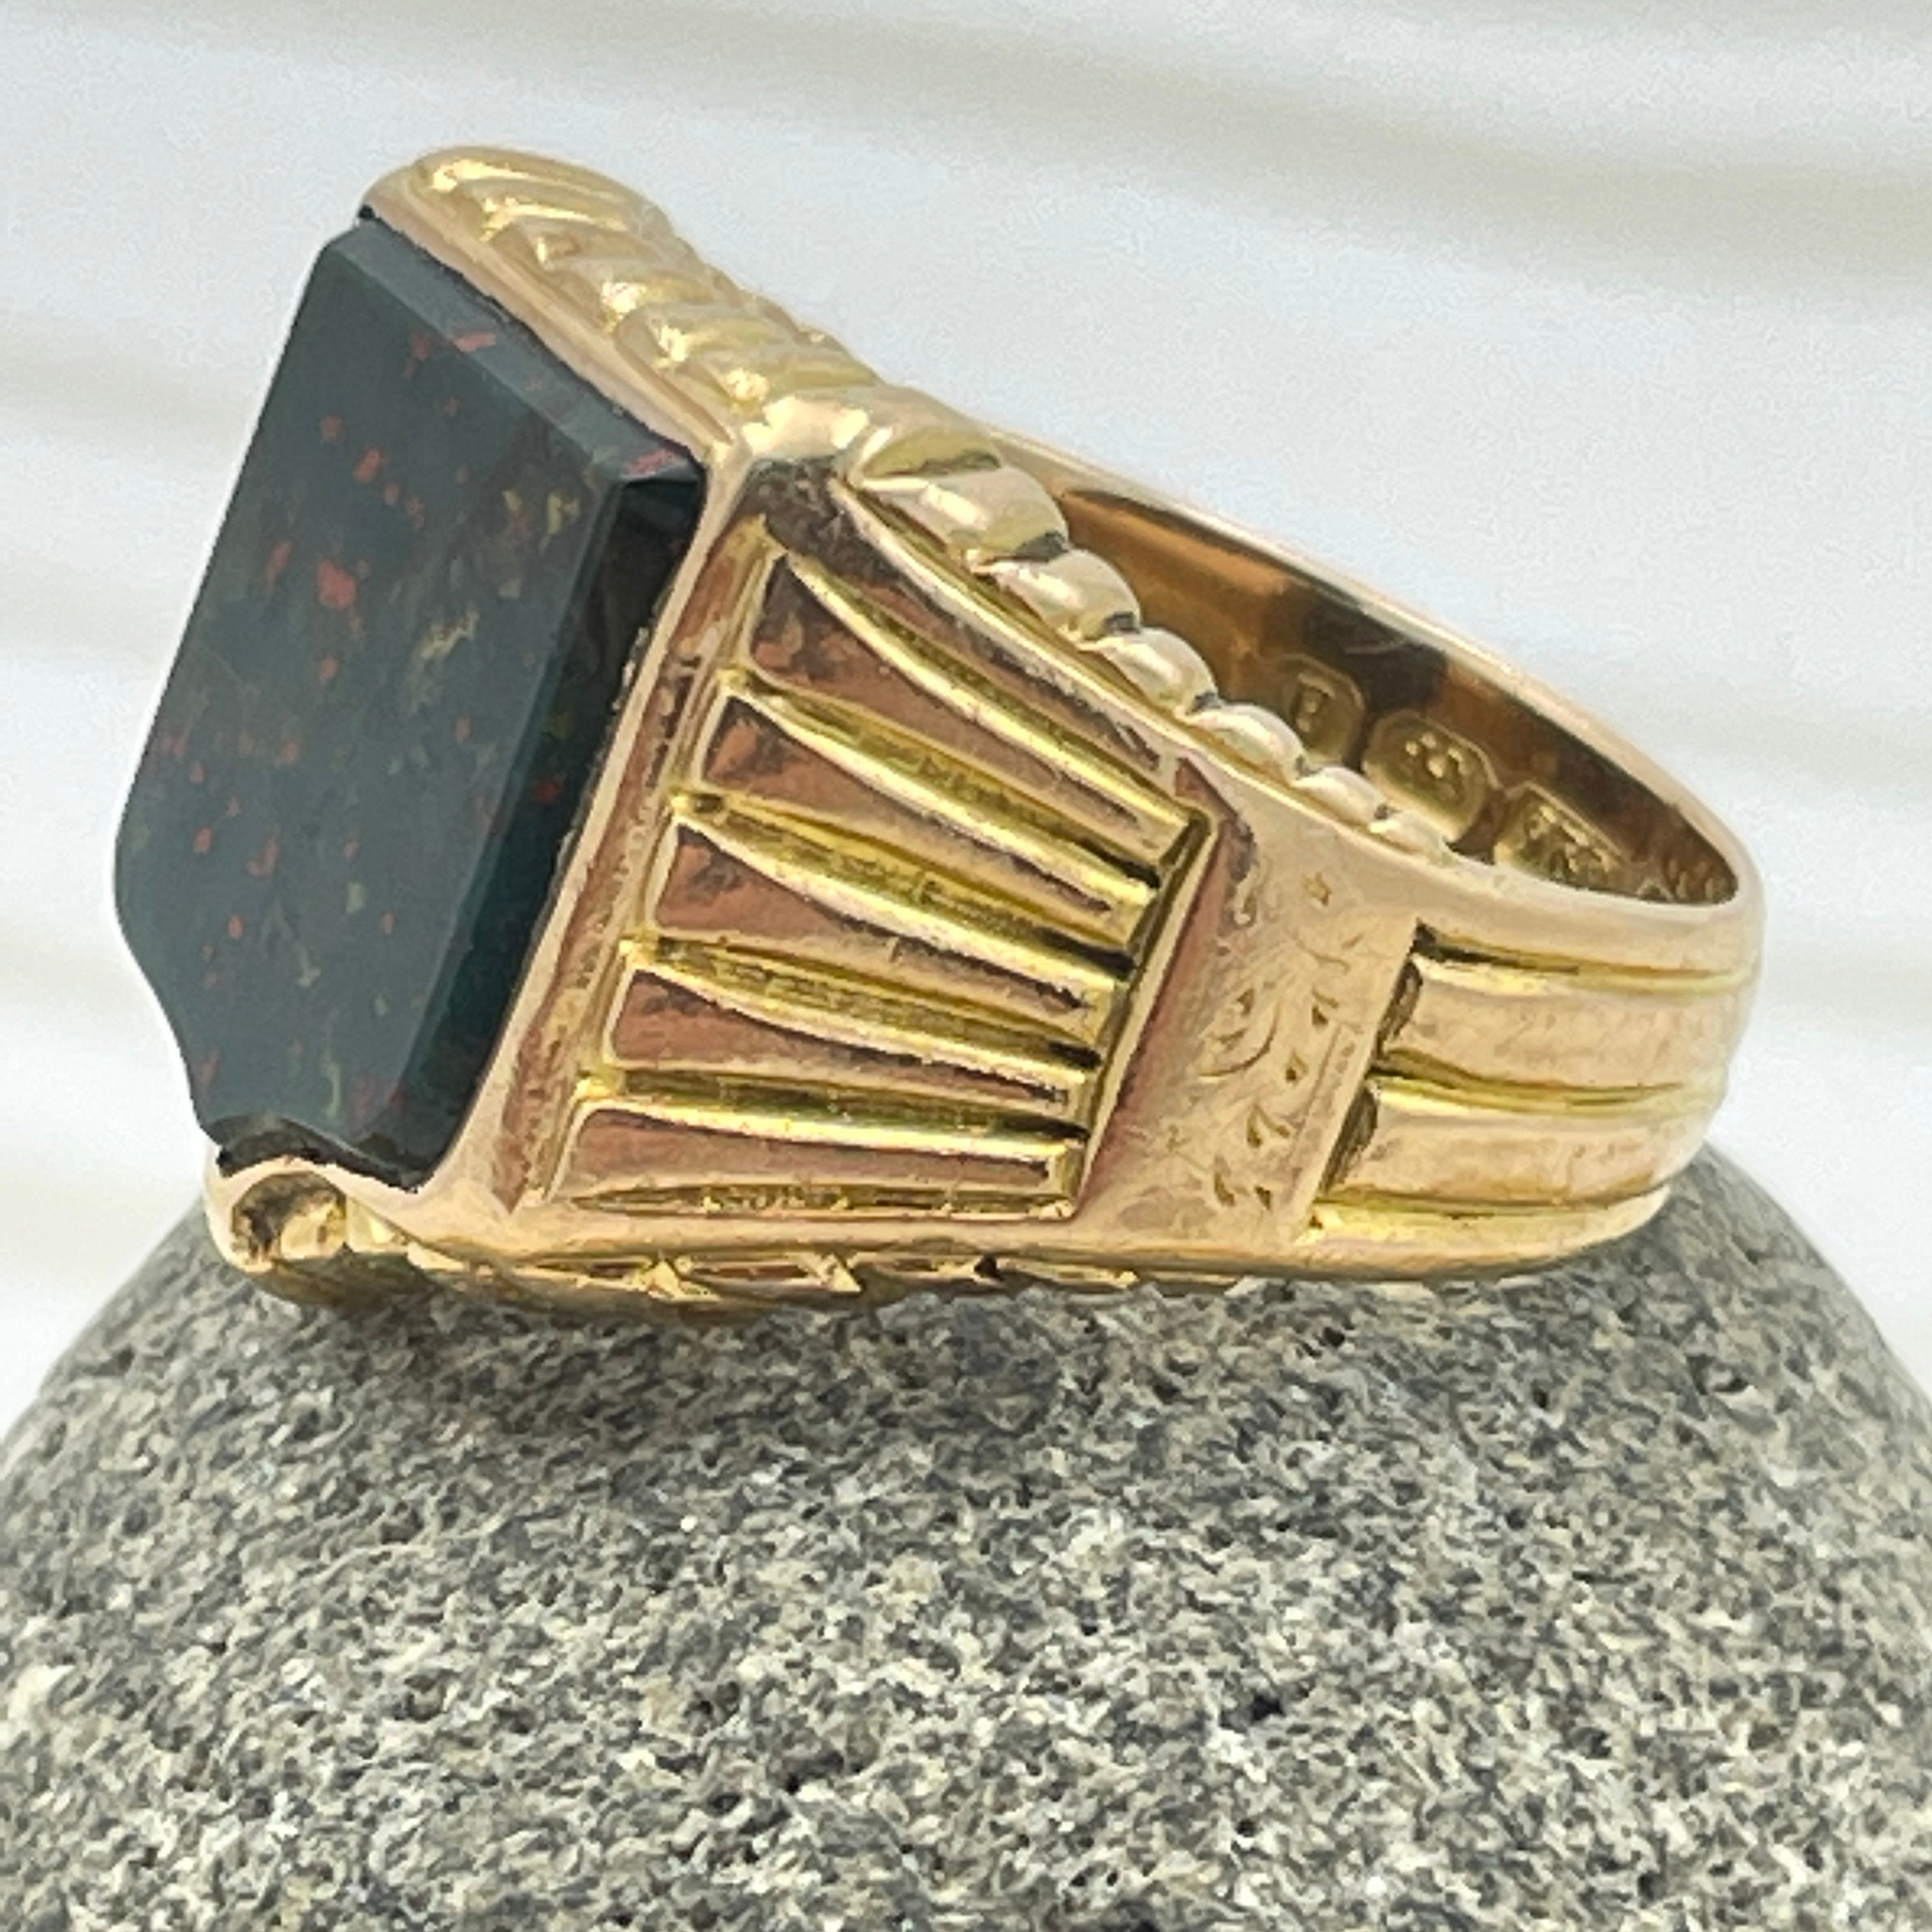 Edwardian, Gents, 15ct Gold, bloodstone signet ring